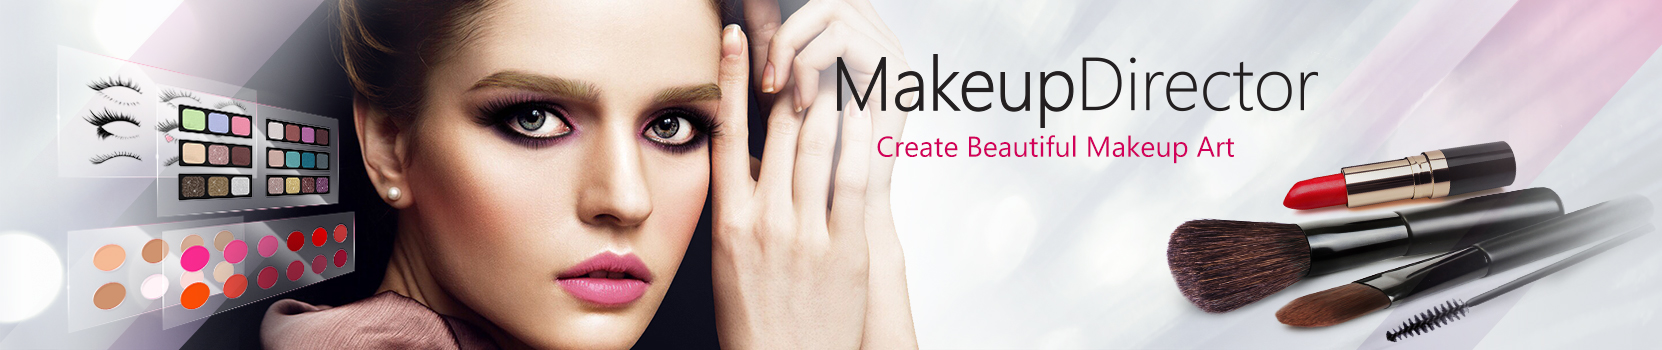 MakeupDirector - Create Beautiful Makeup Art | CyberLink